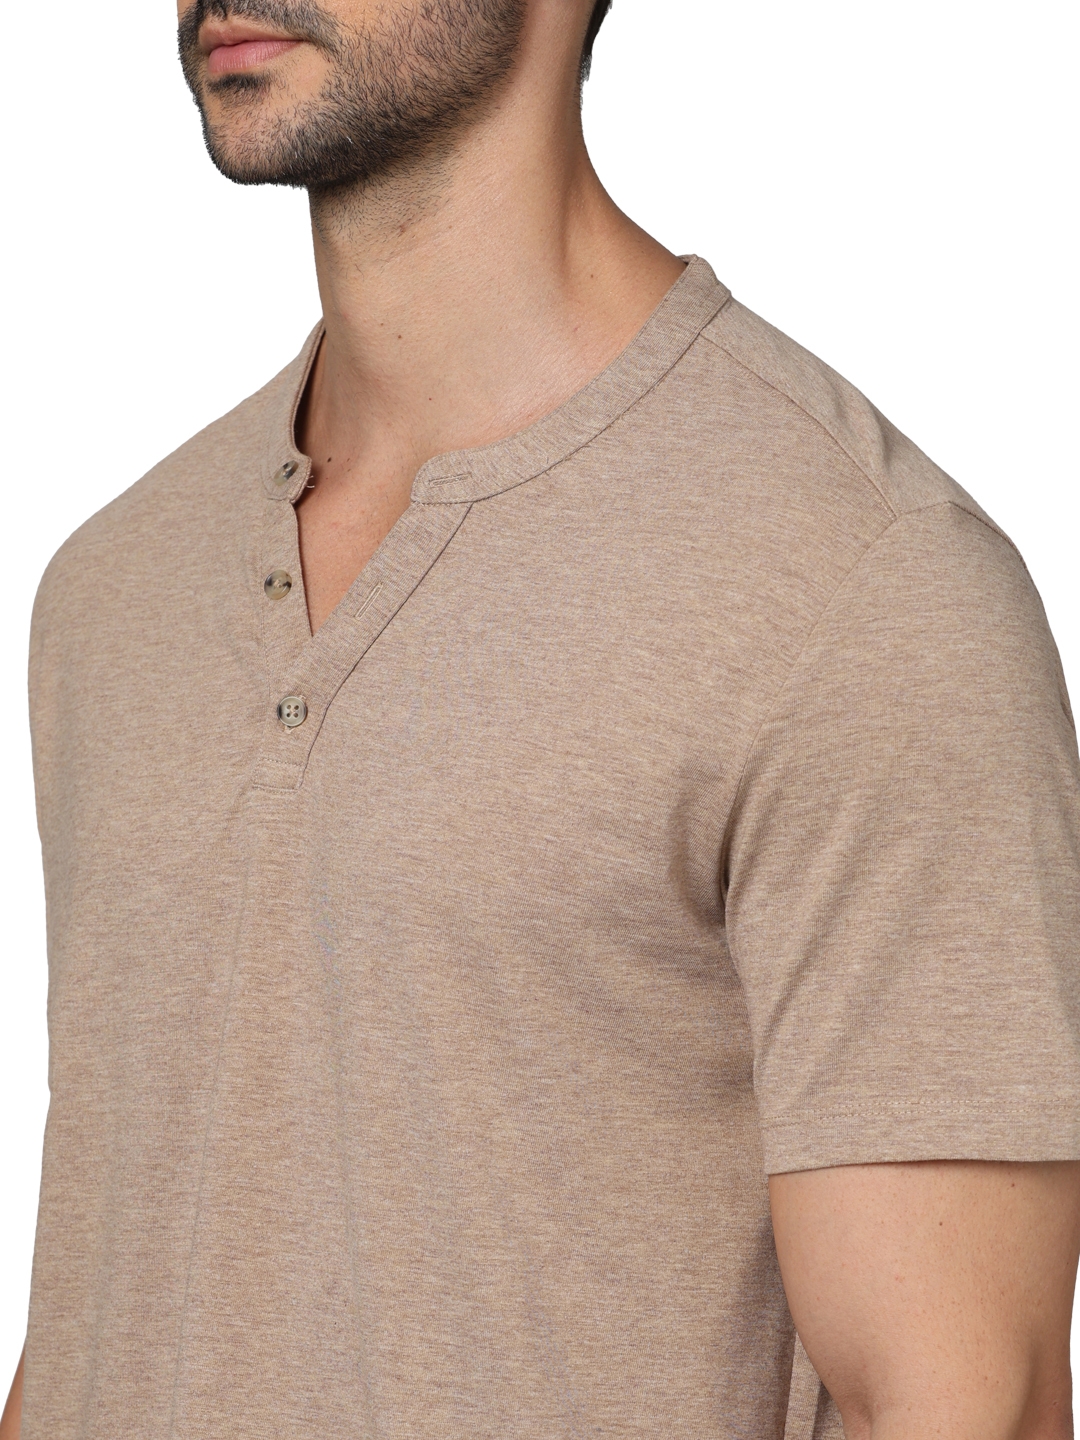 Celio Men Beige Solid Regular Fit Cotton Casual Tshirts